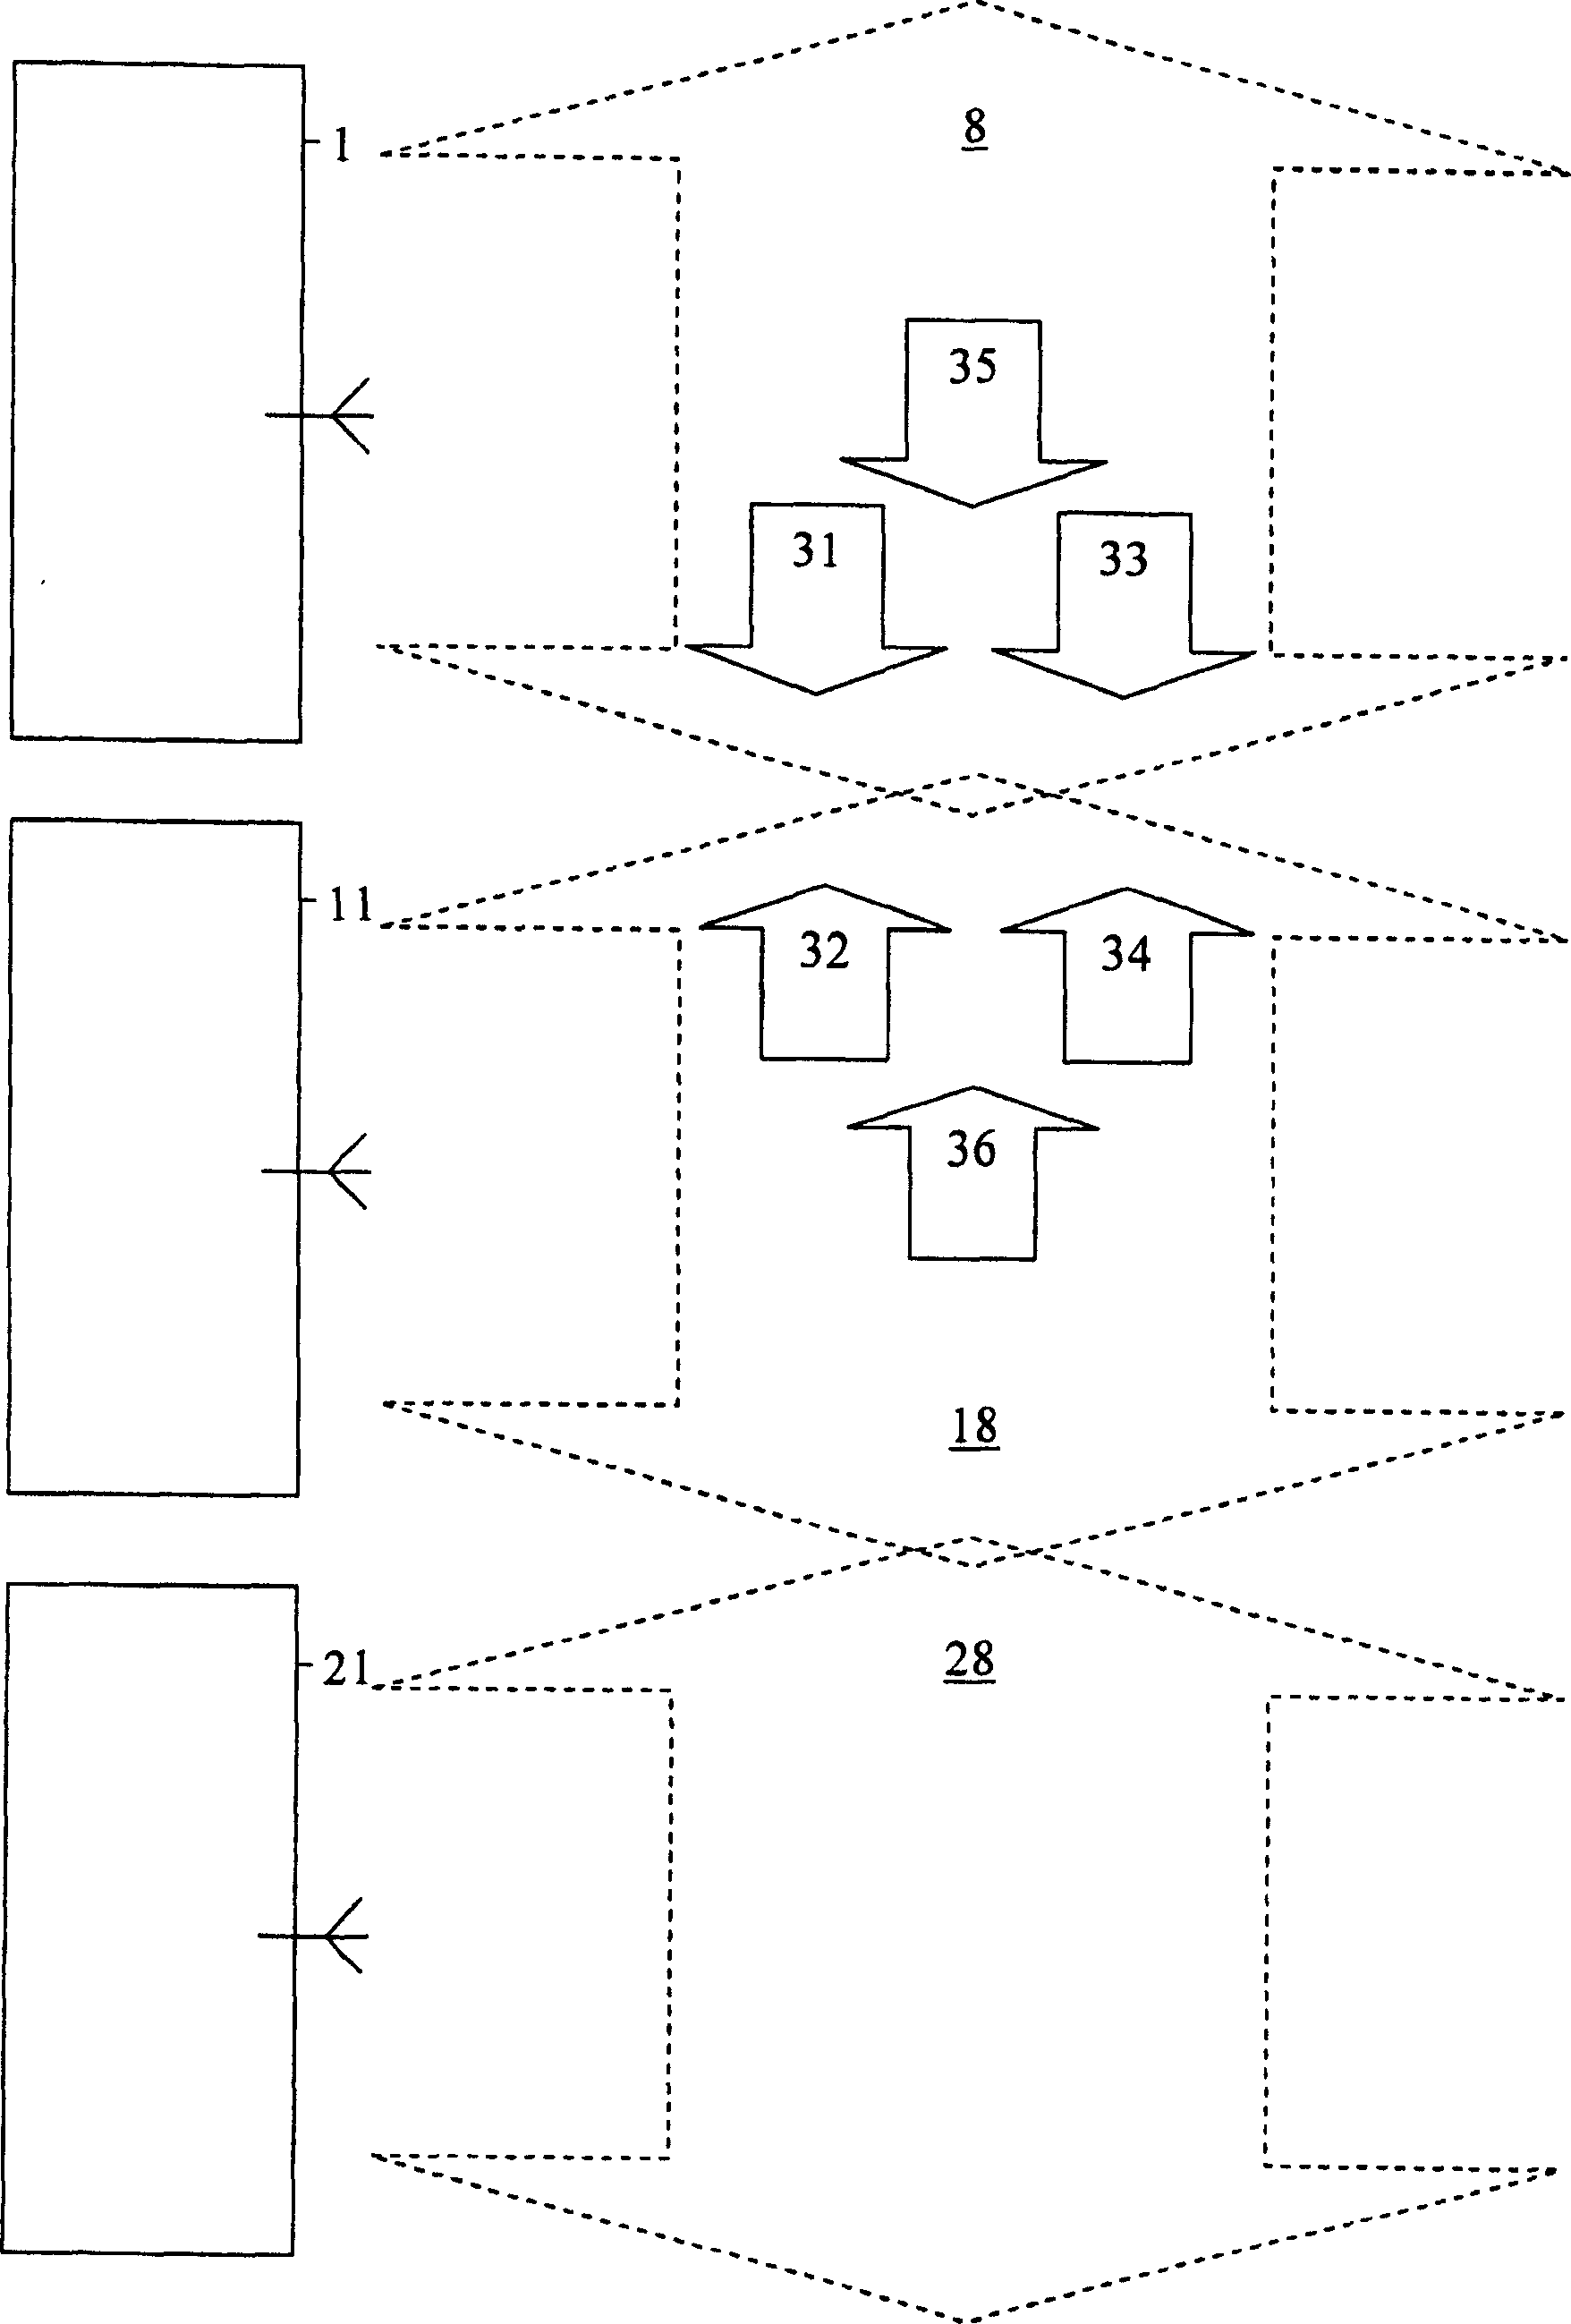 Terminal comprising a transceiver